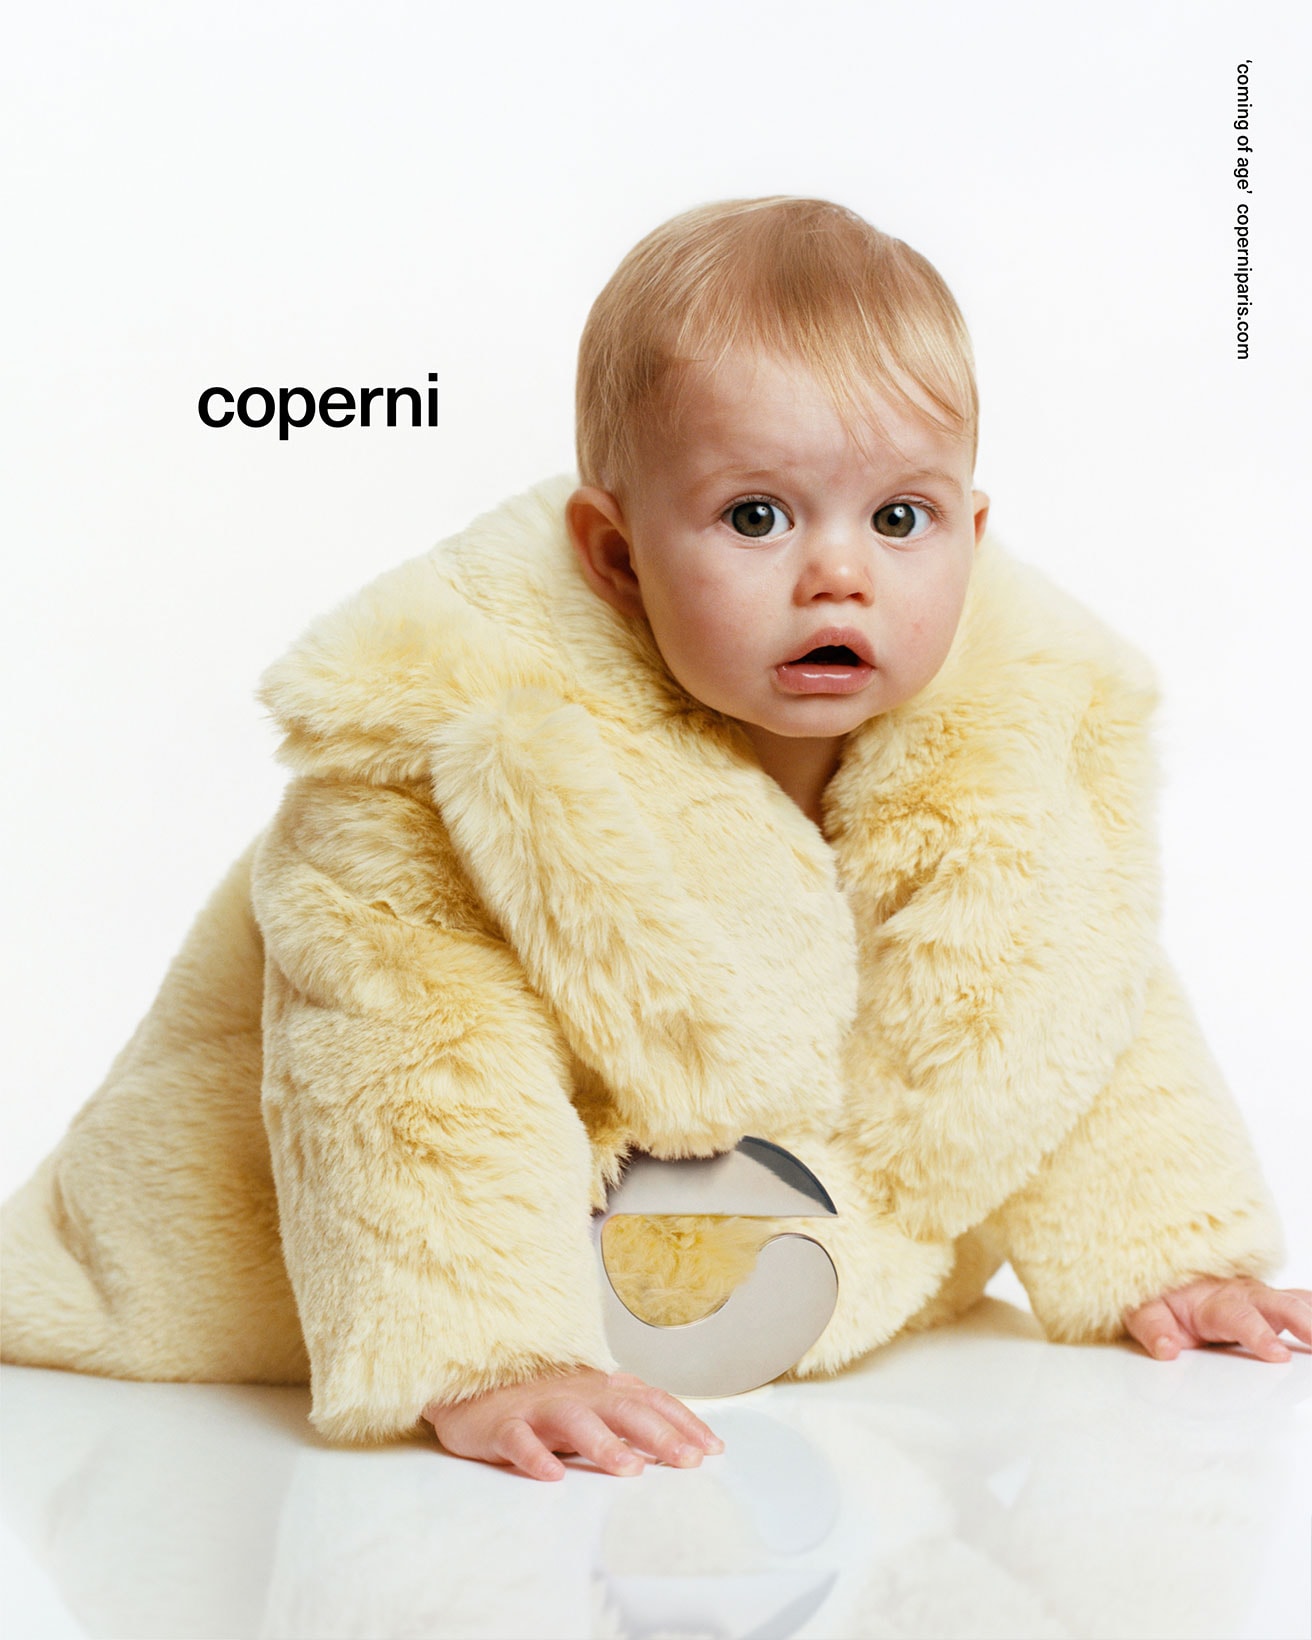 Coperni Fall Winter Campaign Swipe Bag Babies Coming of Age Images